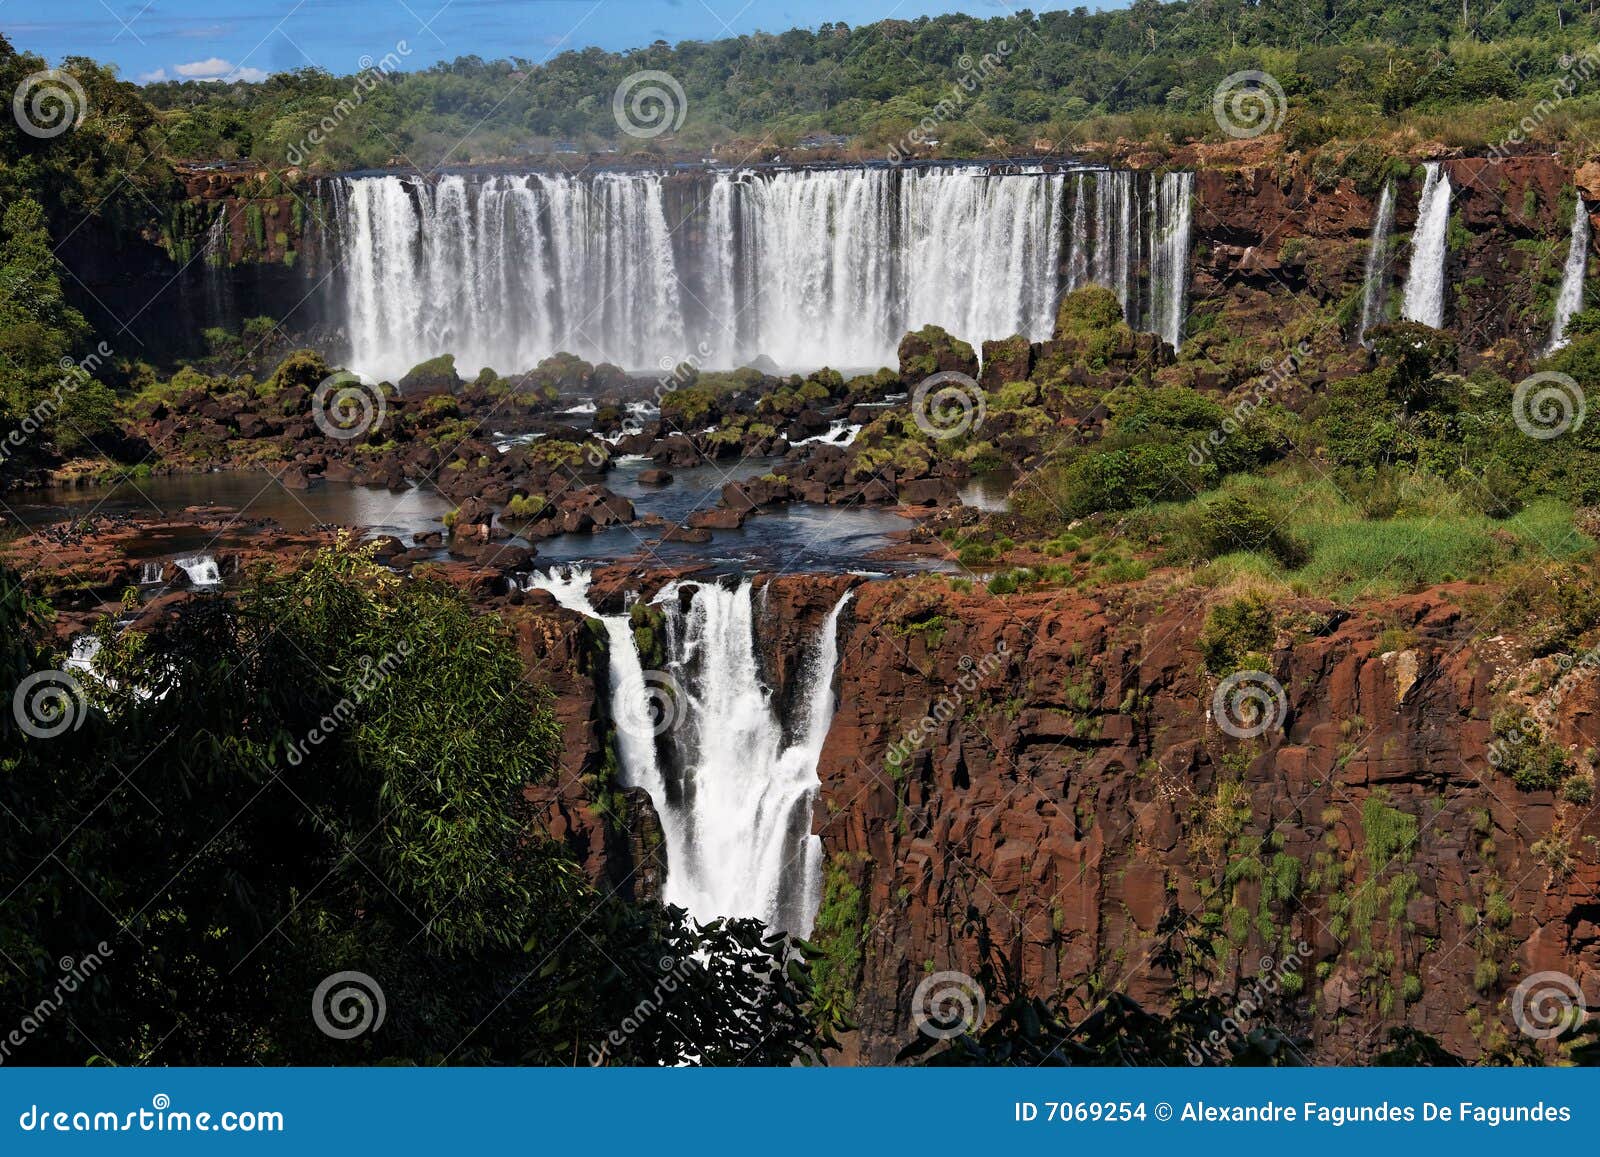 foz do iguacu falls argentina brazil